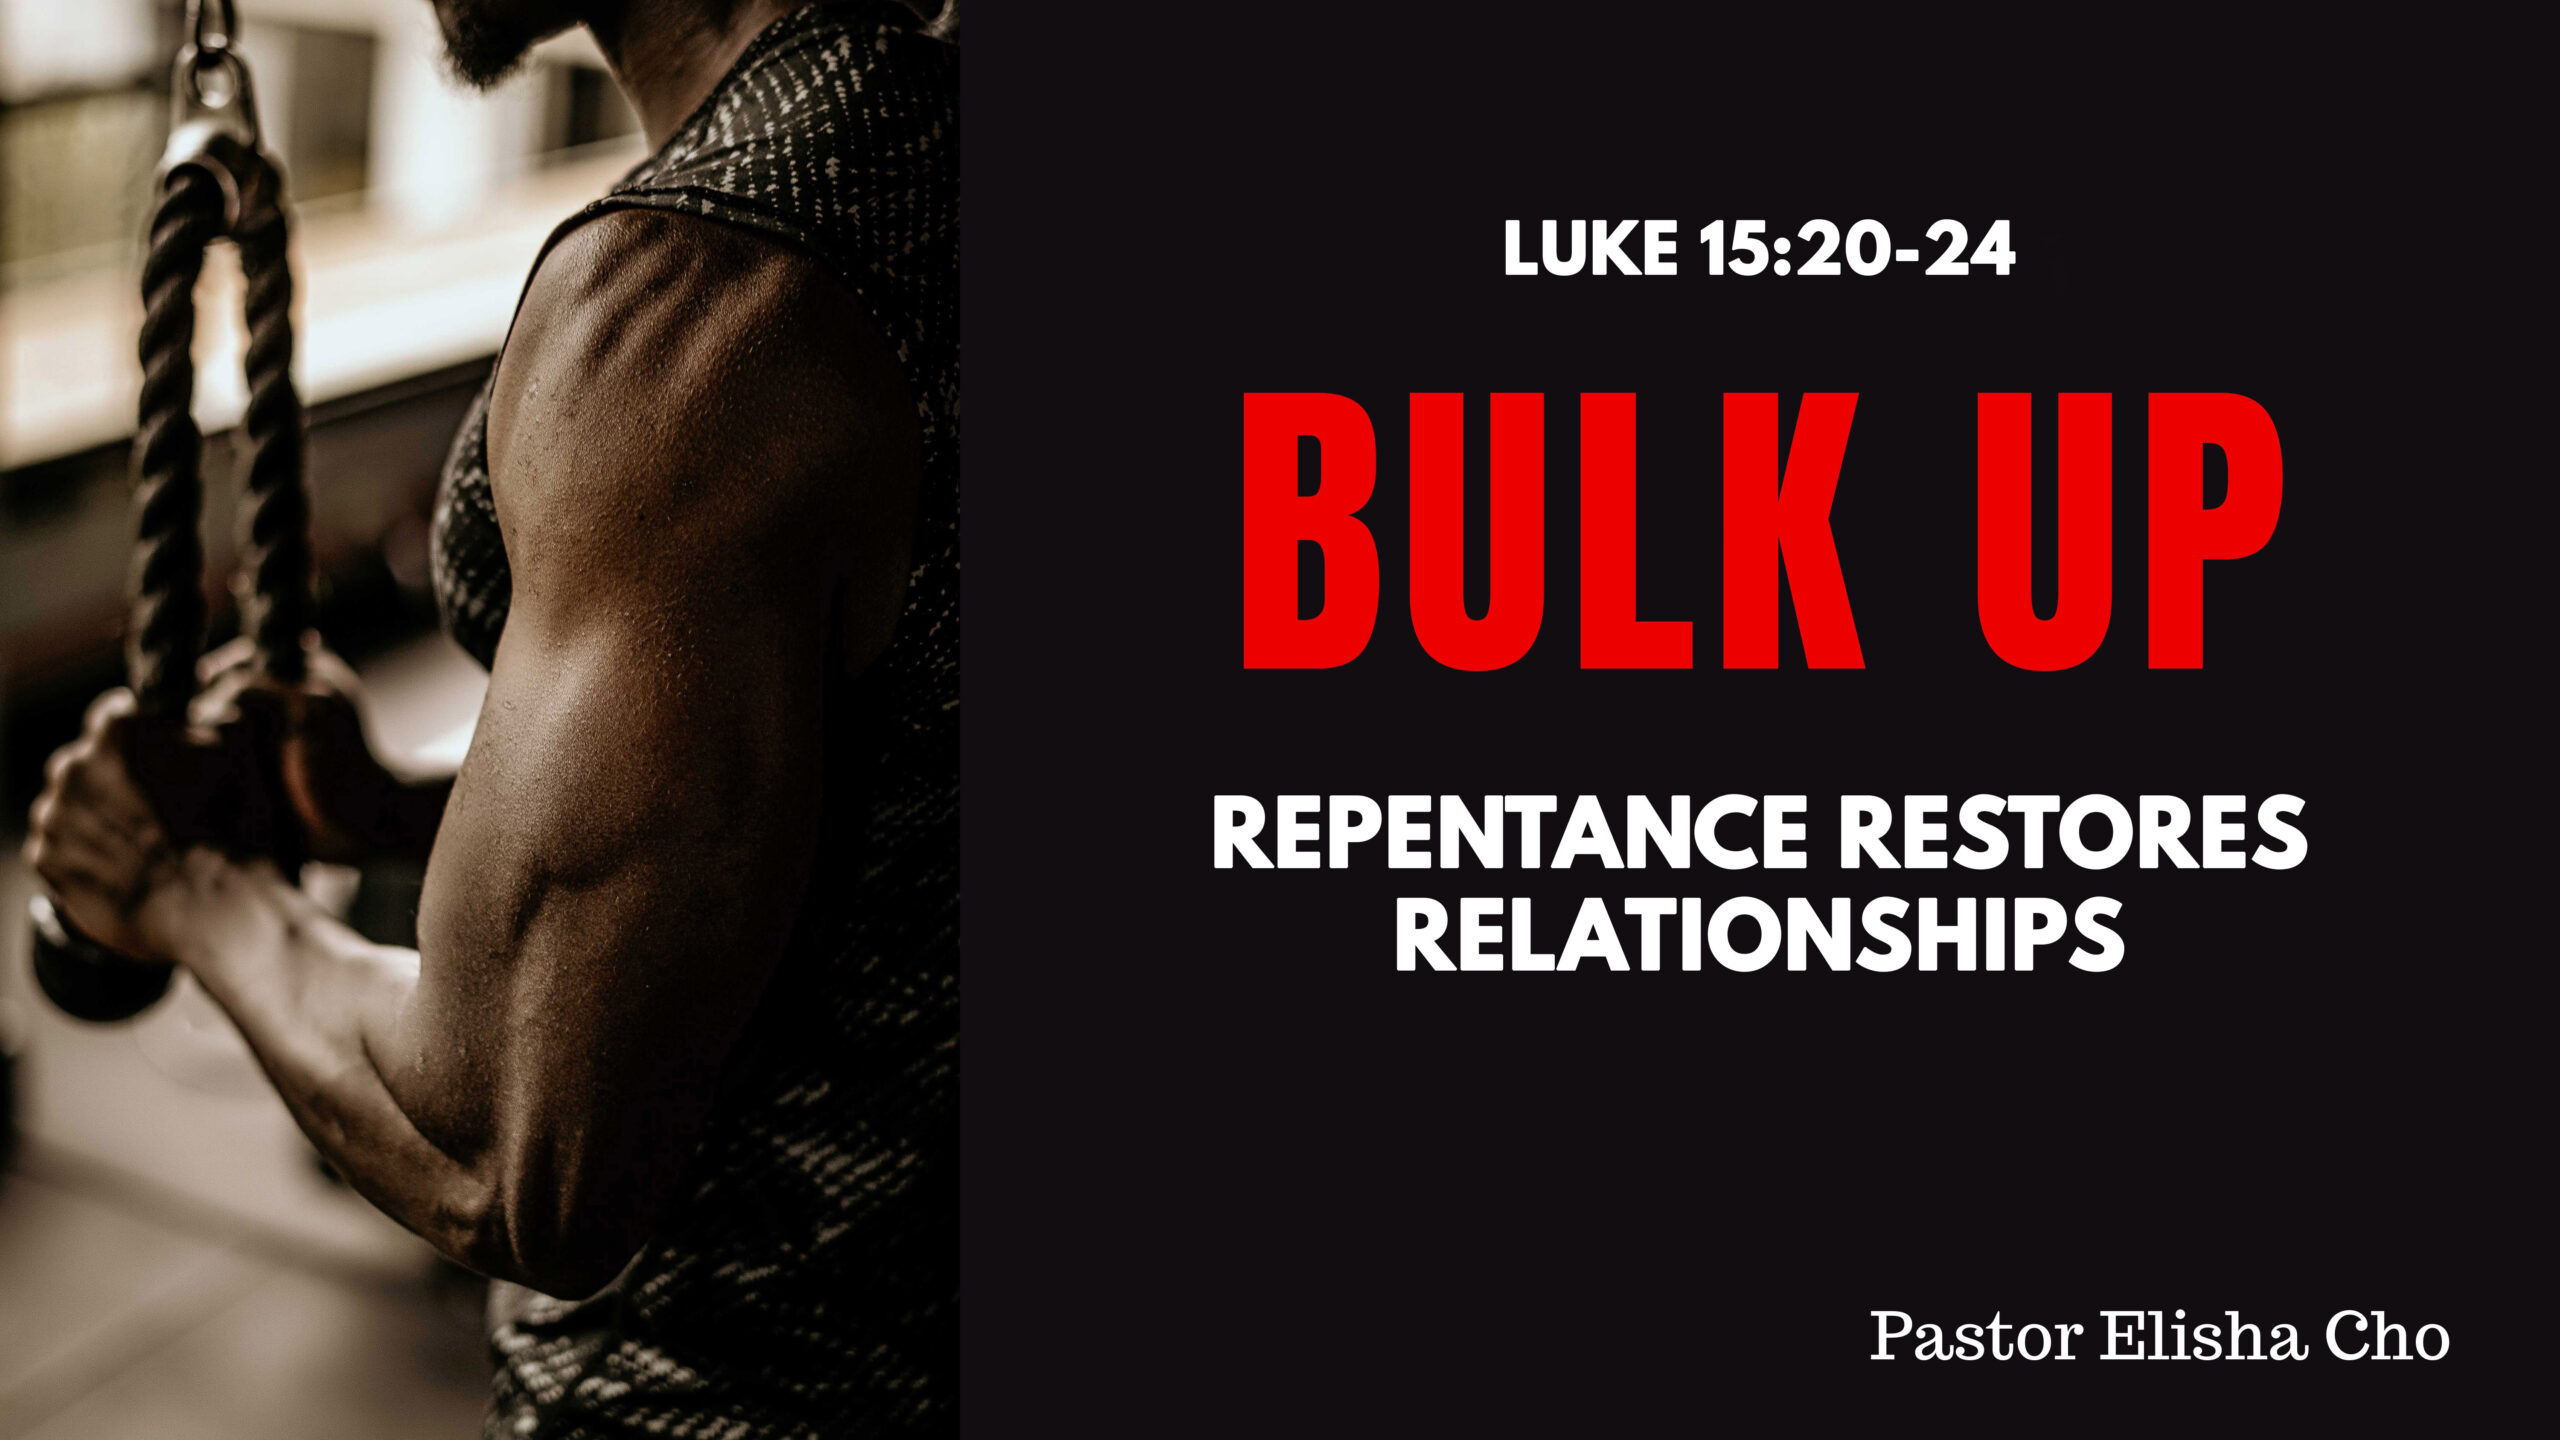 4 – Repentance Restores Relationships